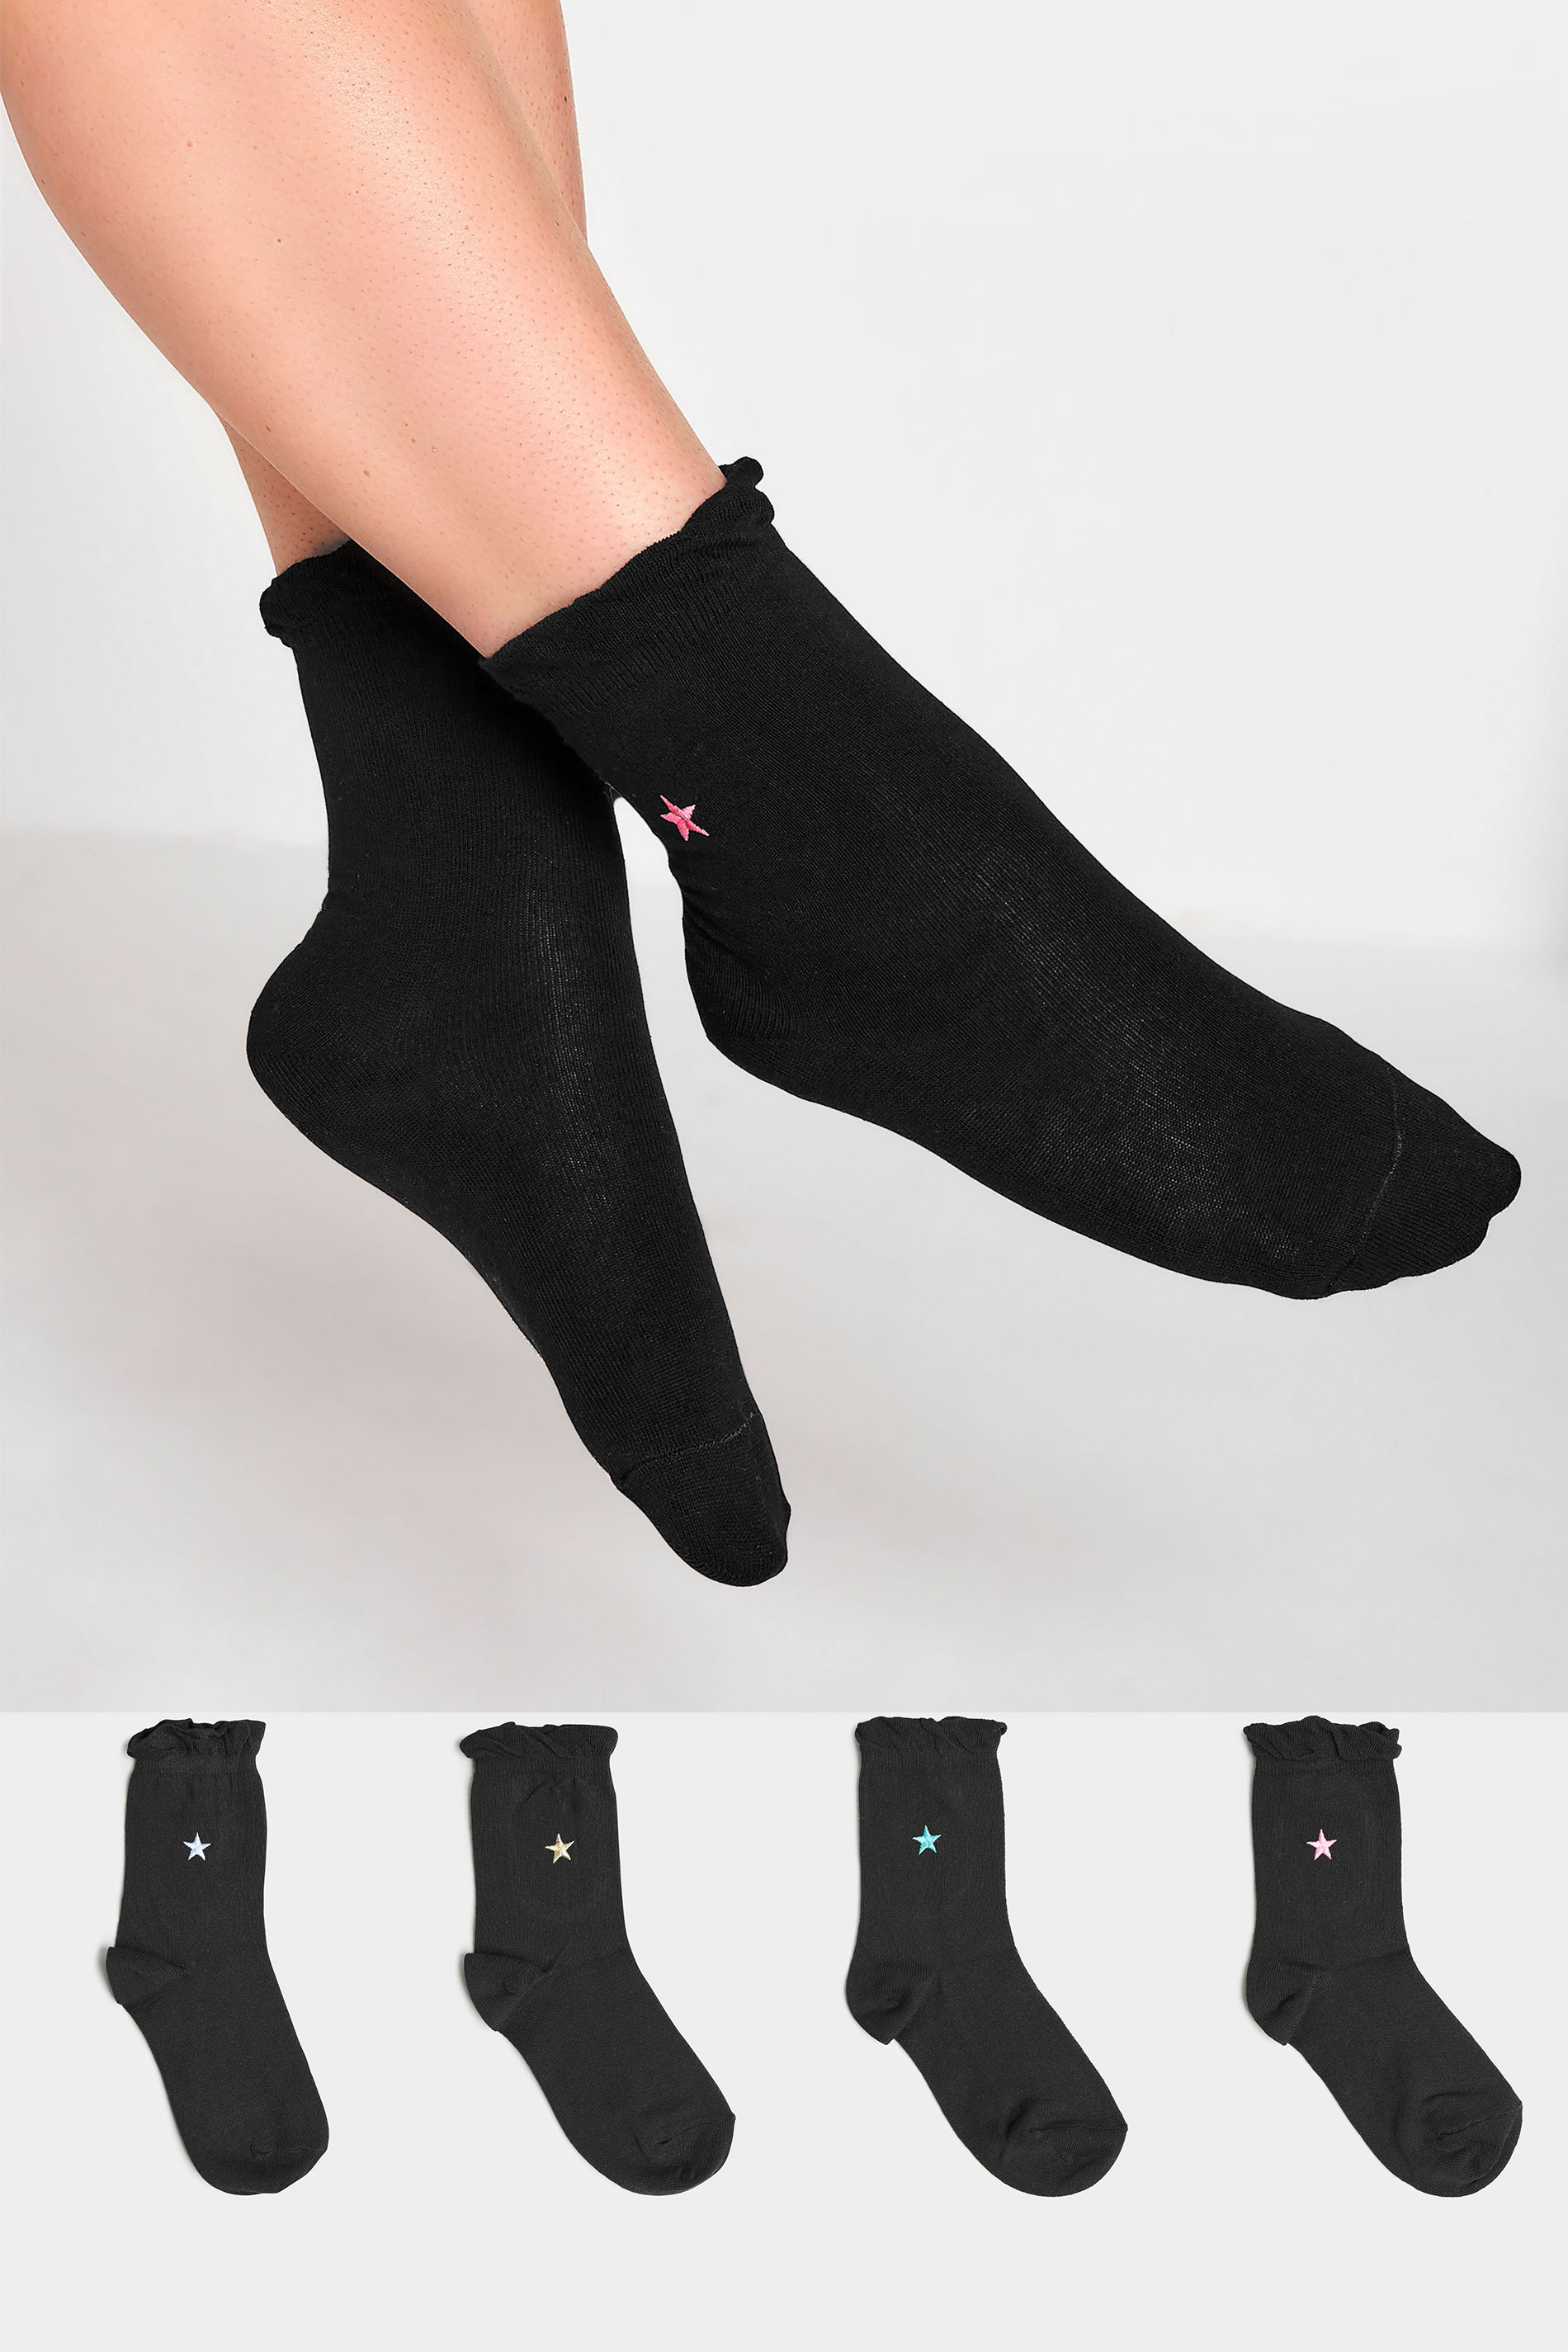 4 PACK Black Embroidered Star Ankle Socks_A.jpg